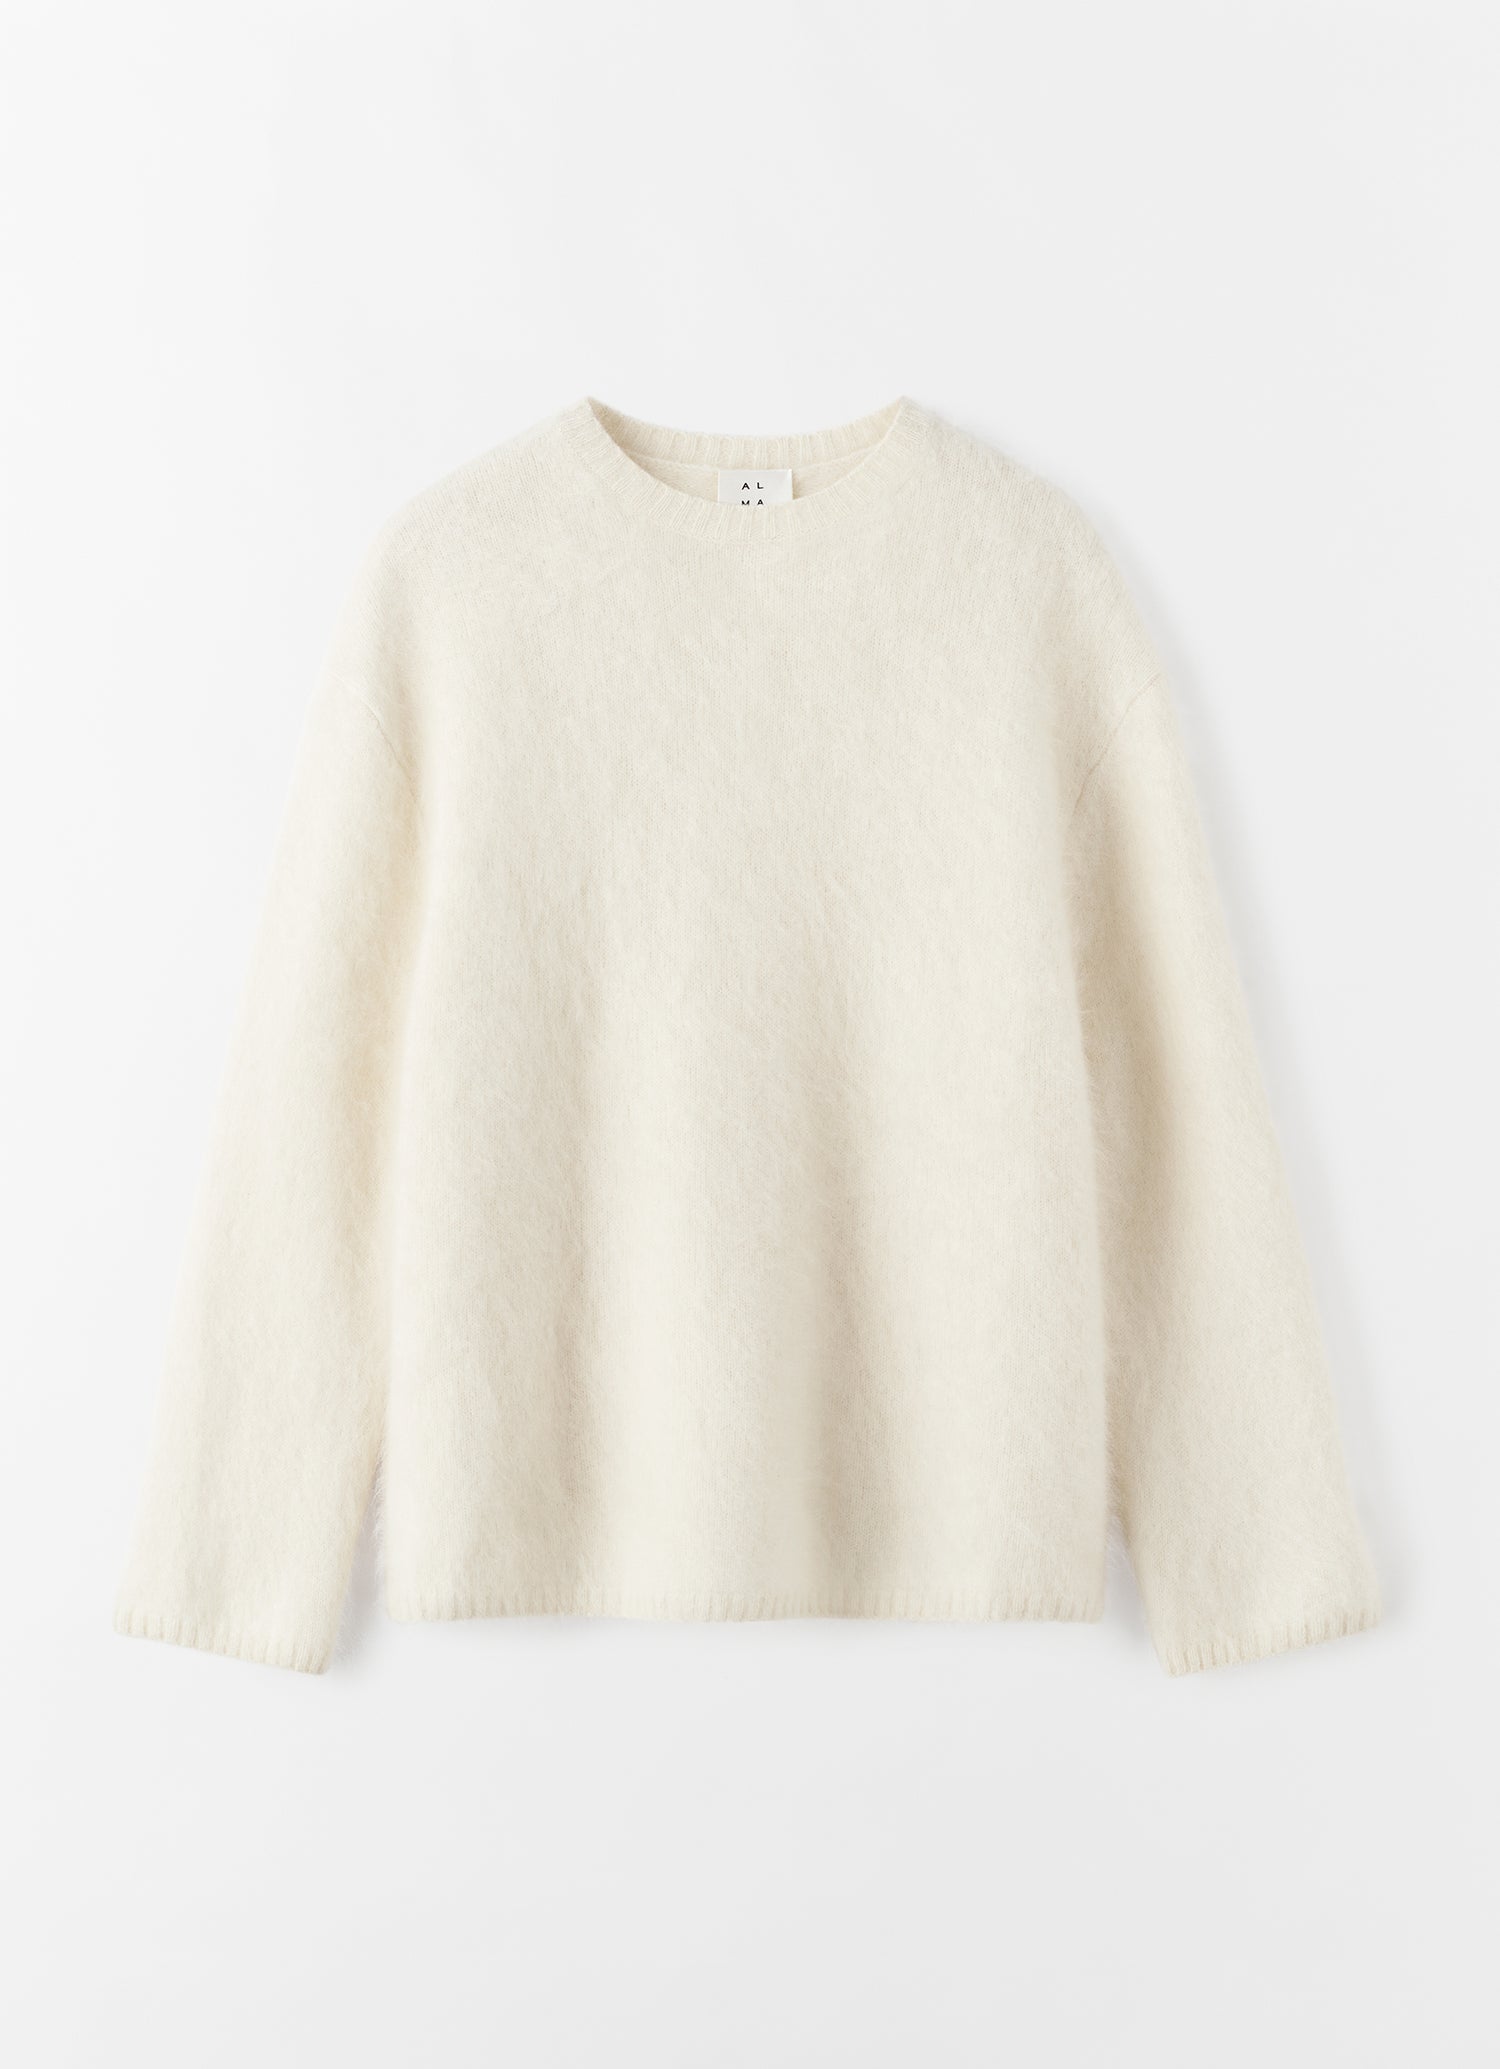 Floy Cashmere Sweater, cream